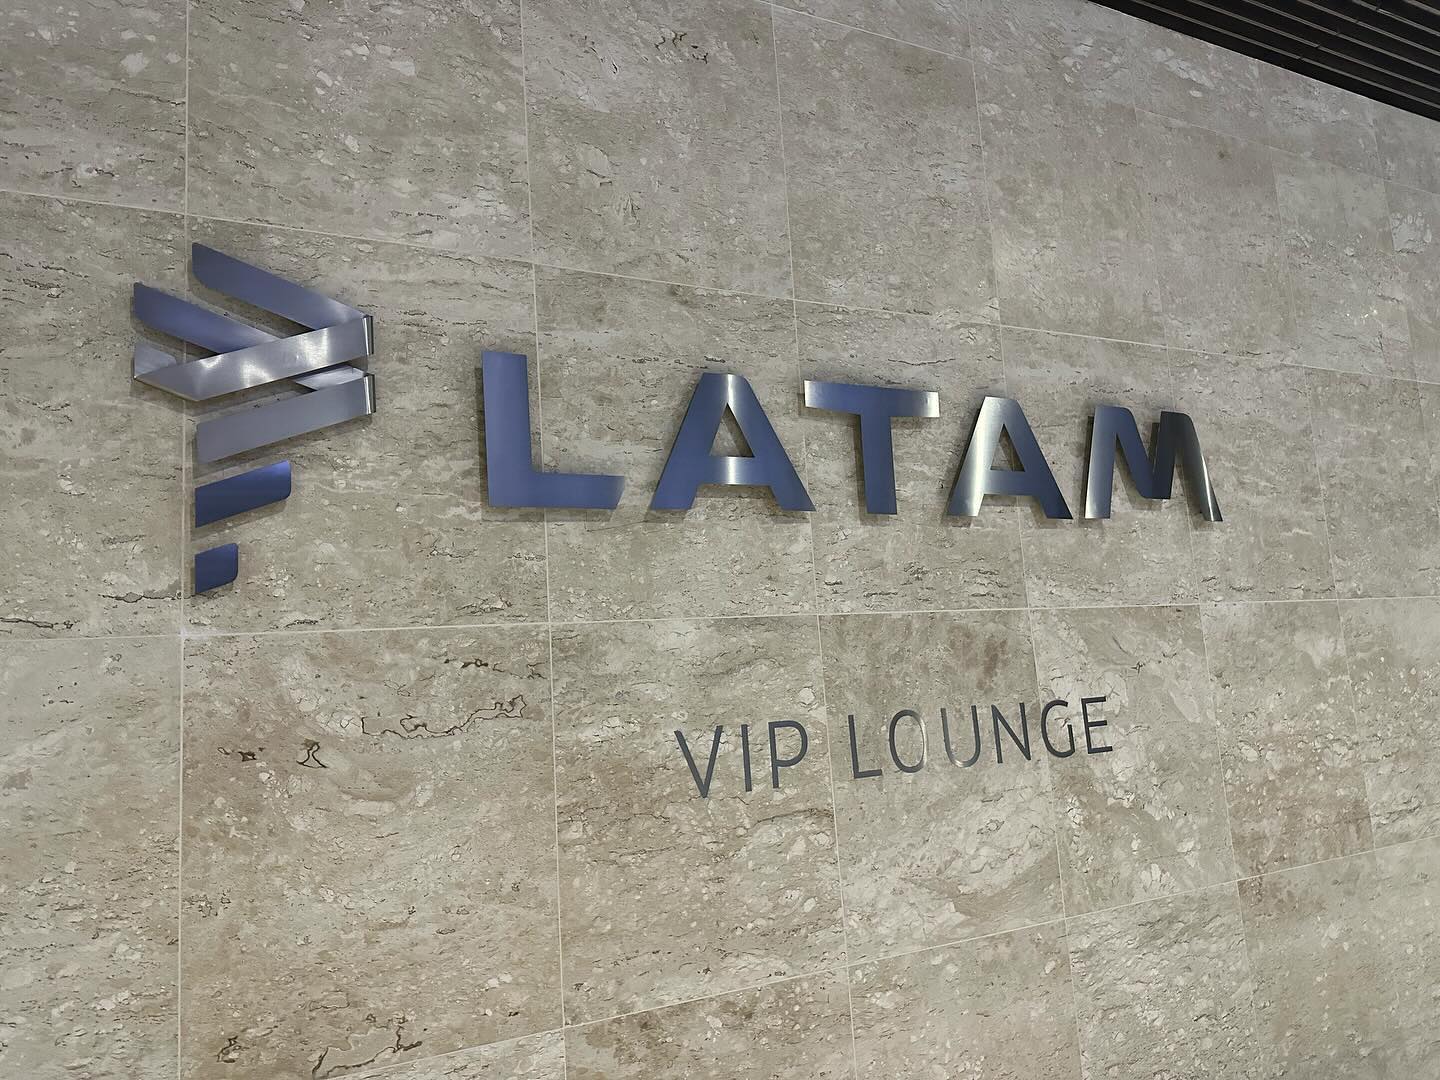 LATAM VIP lounge at Guarulhos airport